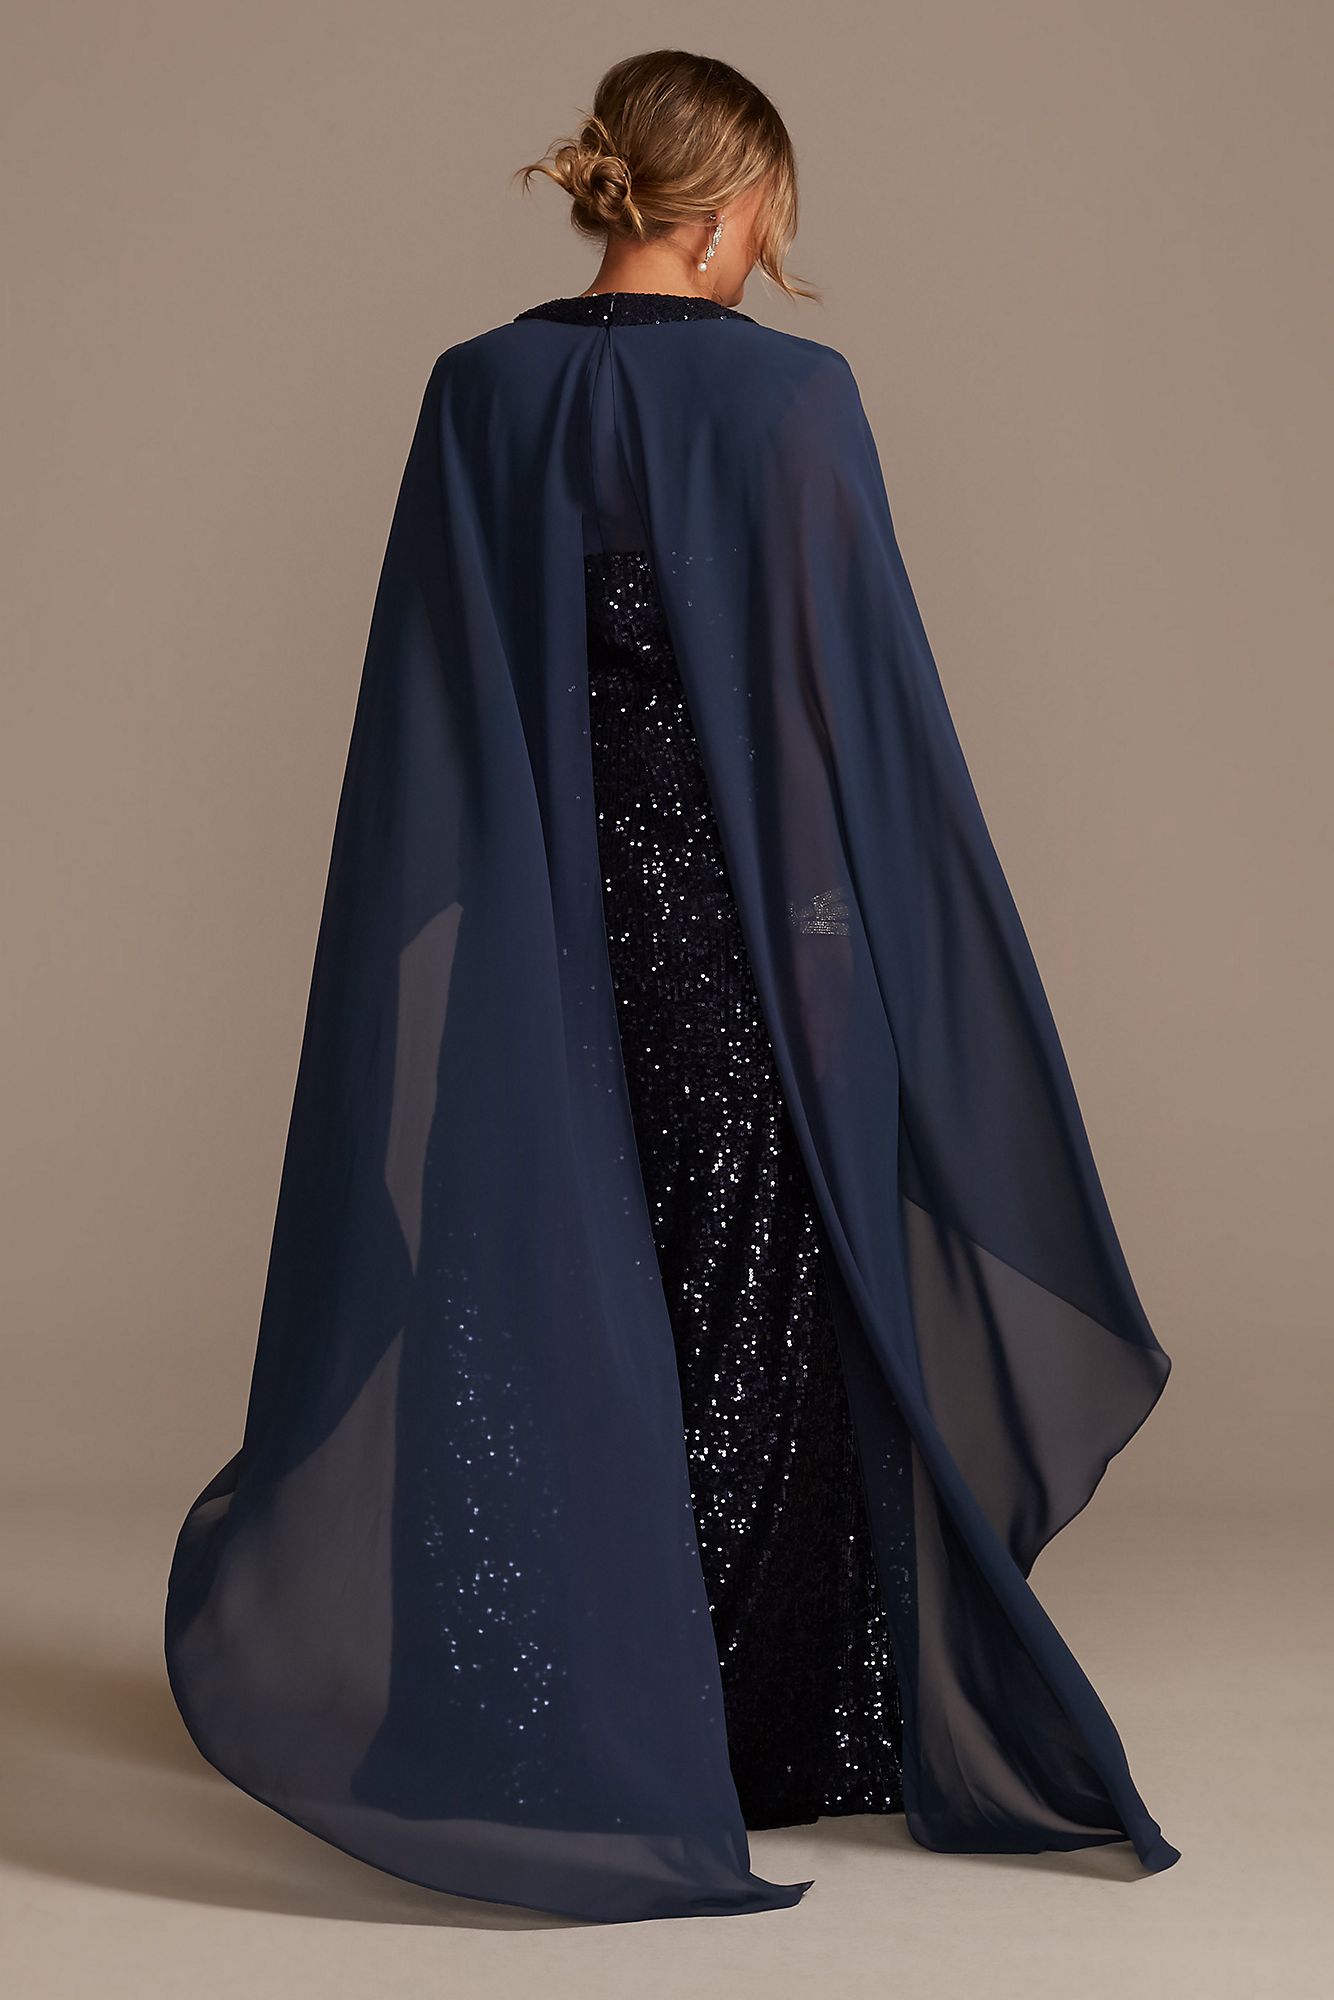 Allover Sequin Plus Size Gown with Chiffon Capelet David's Bridal WBM2189W